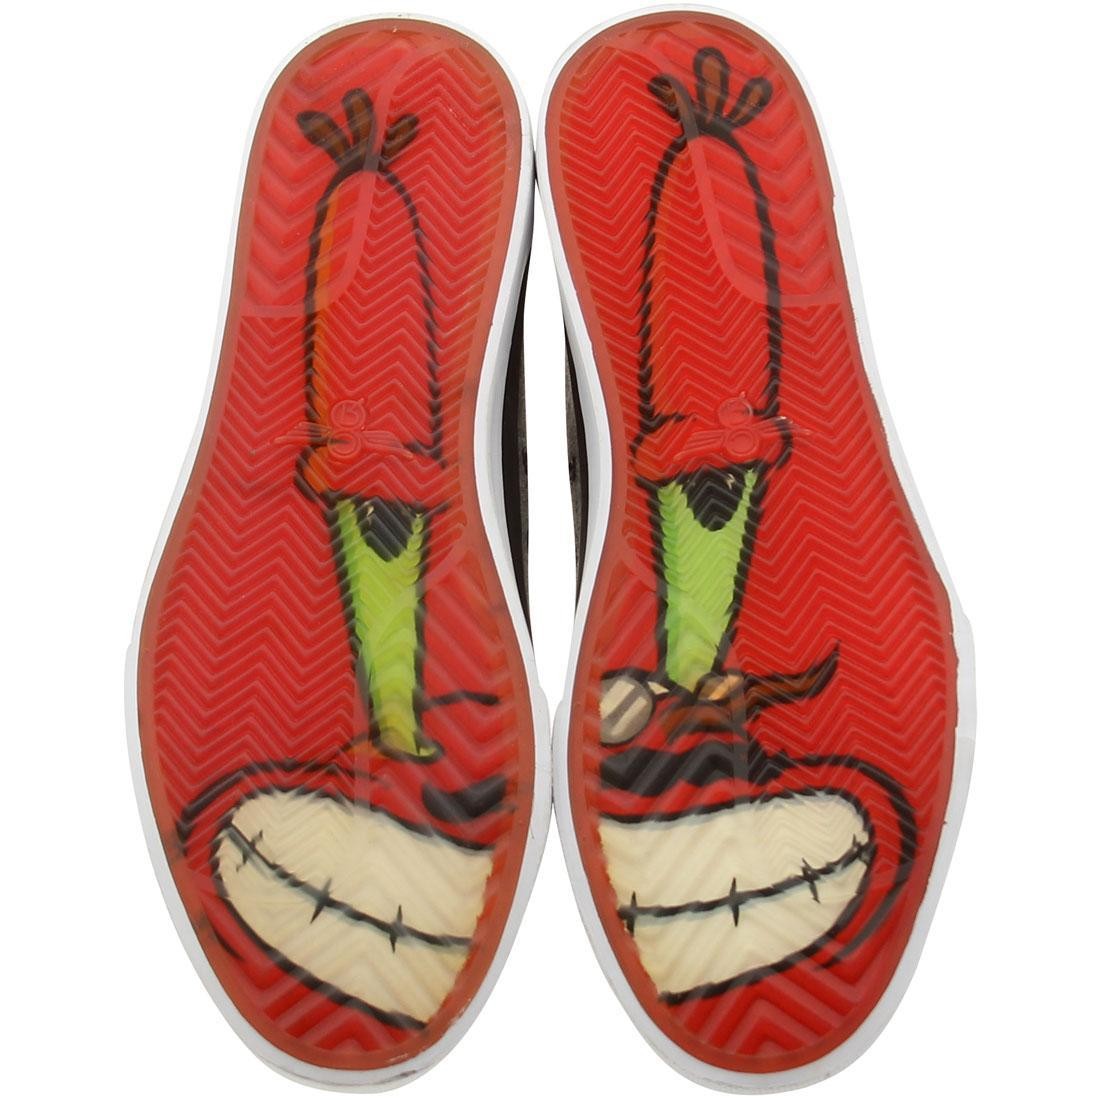 BAIT x SpongeBob x Creative Recreation Kaplan Mr. Krabs Shoes Nickelodeon  (grey pinstripe)